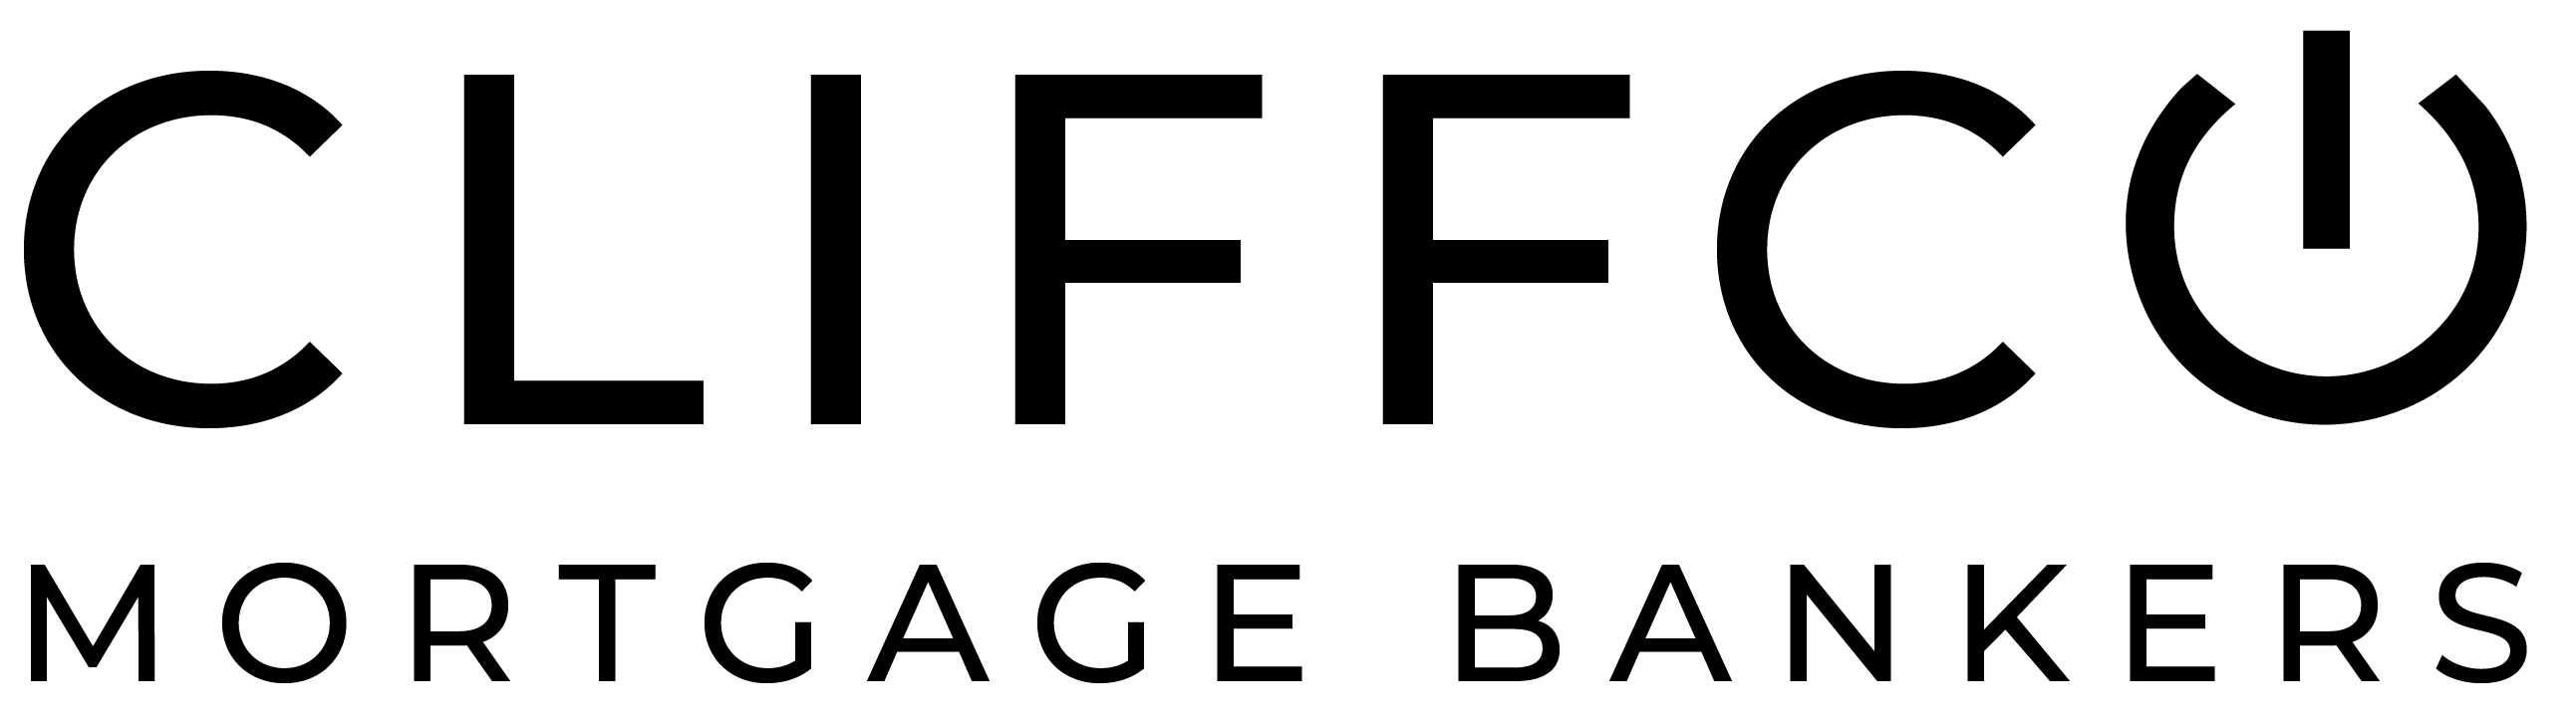 Christian Nguyen Logo